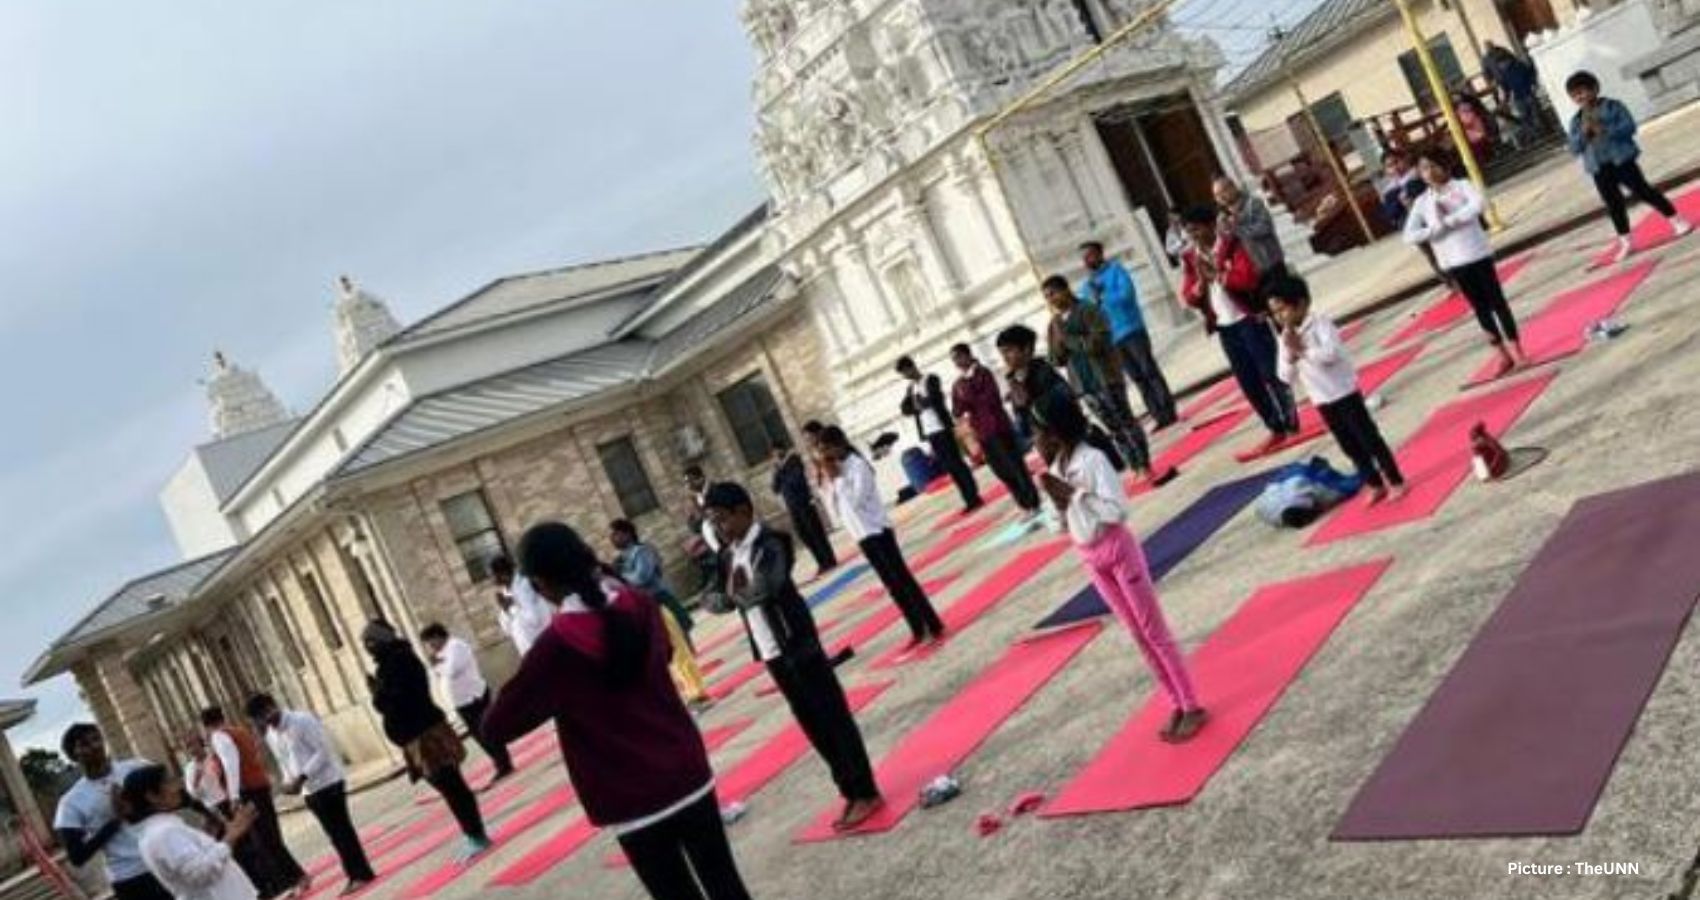 Featured & Cover Hindu Swayamsevak Sangh Holds Annual “Health for Humanity Yogathon”